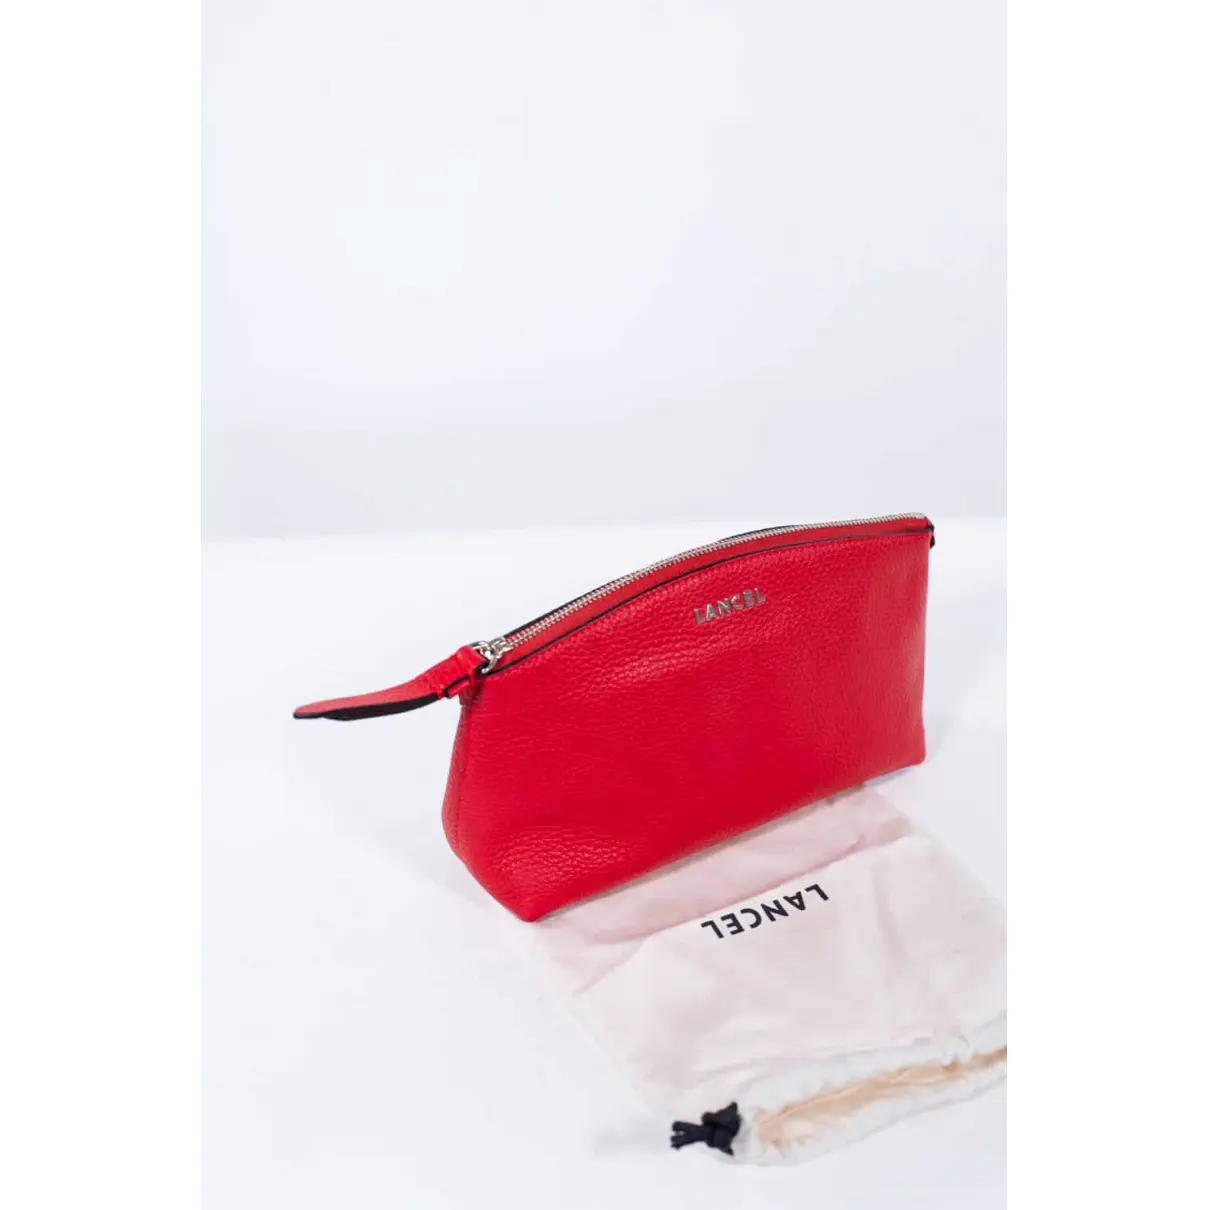 Buy Lancel Leather purse online